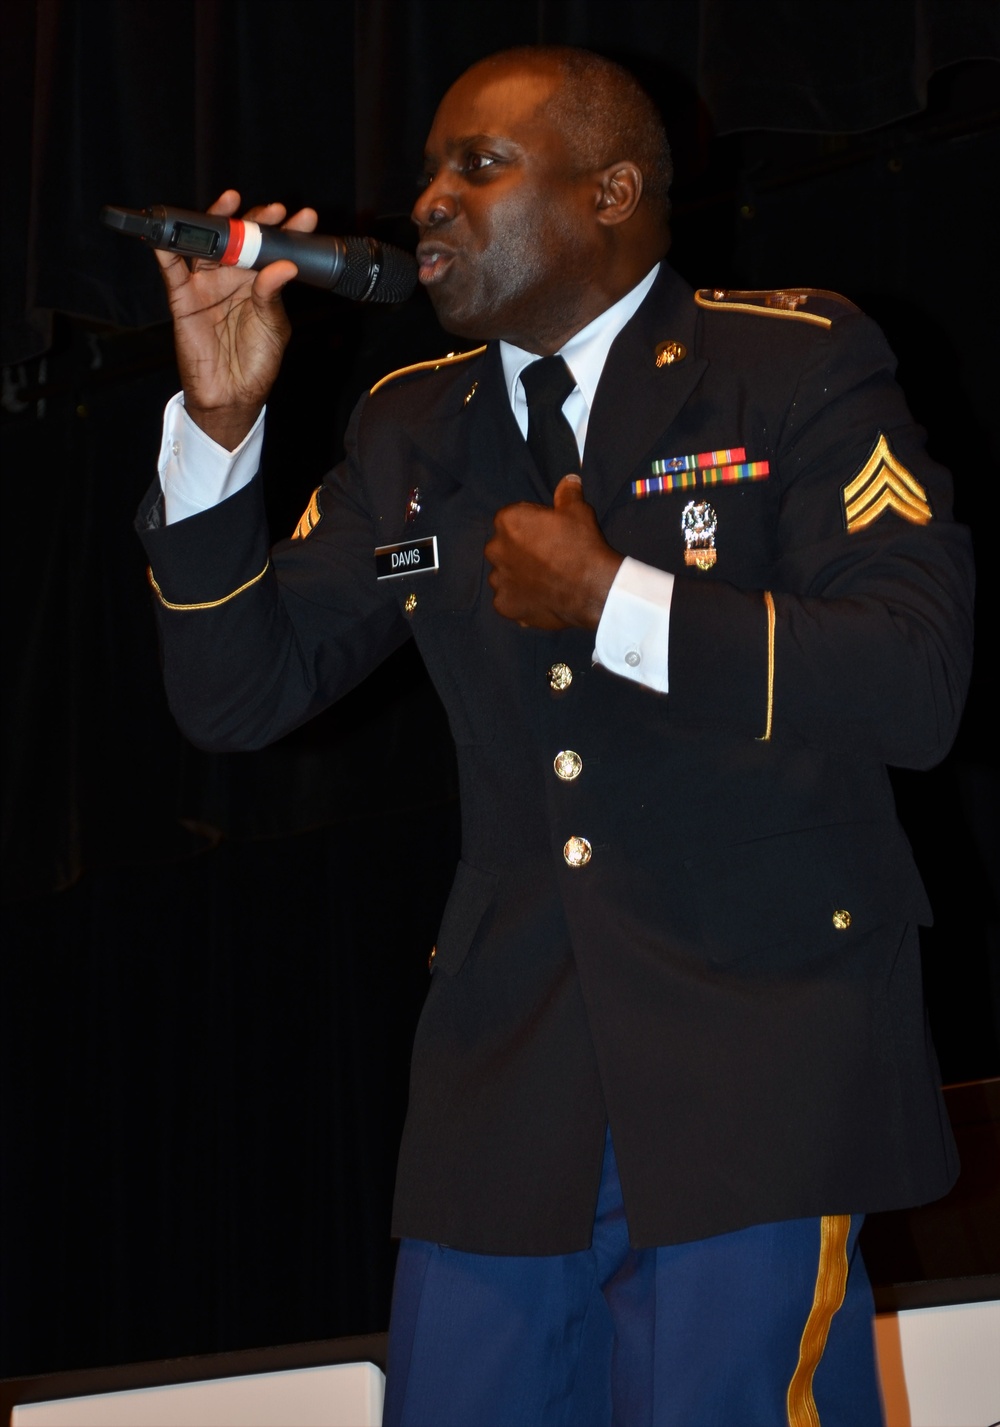 US Army Alaska’s 9th Army Band member honored with prestigious award